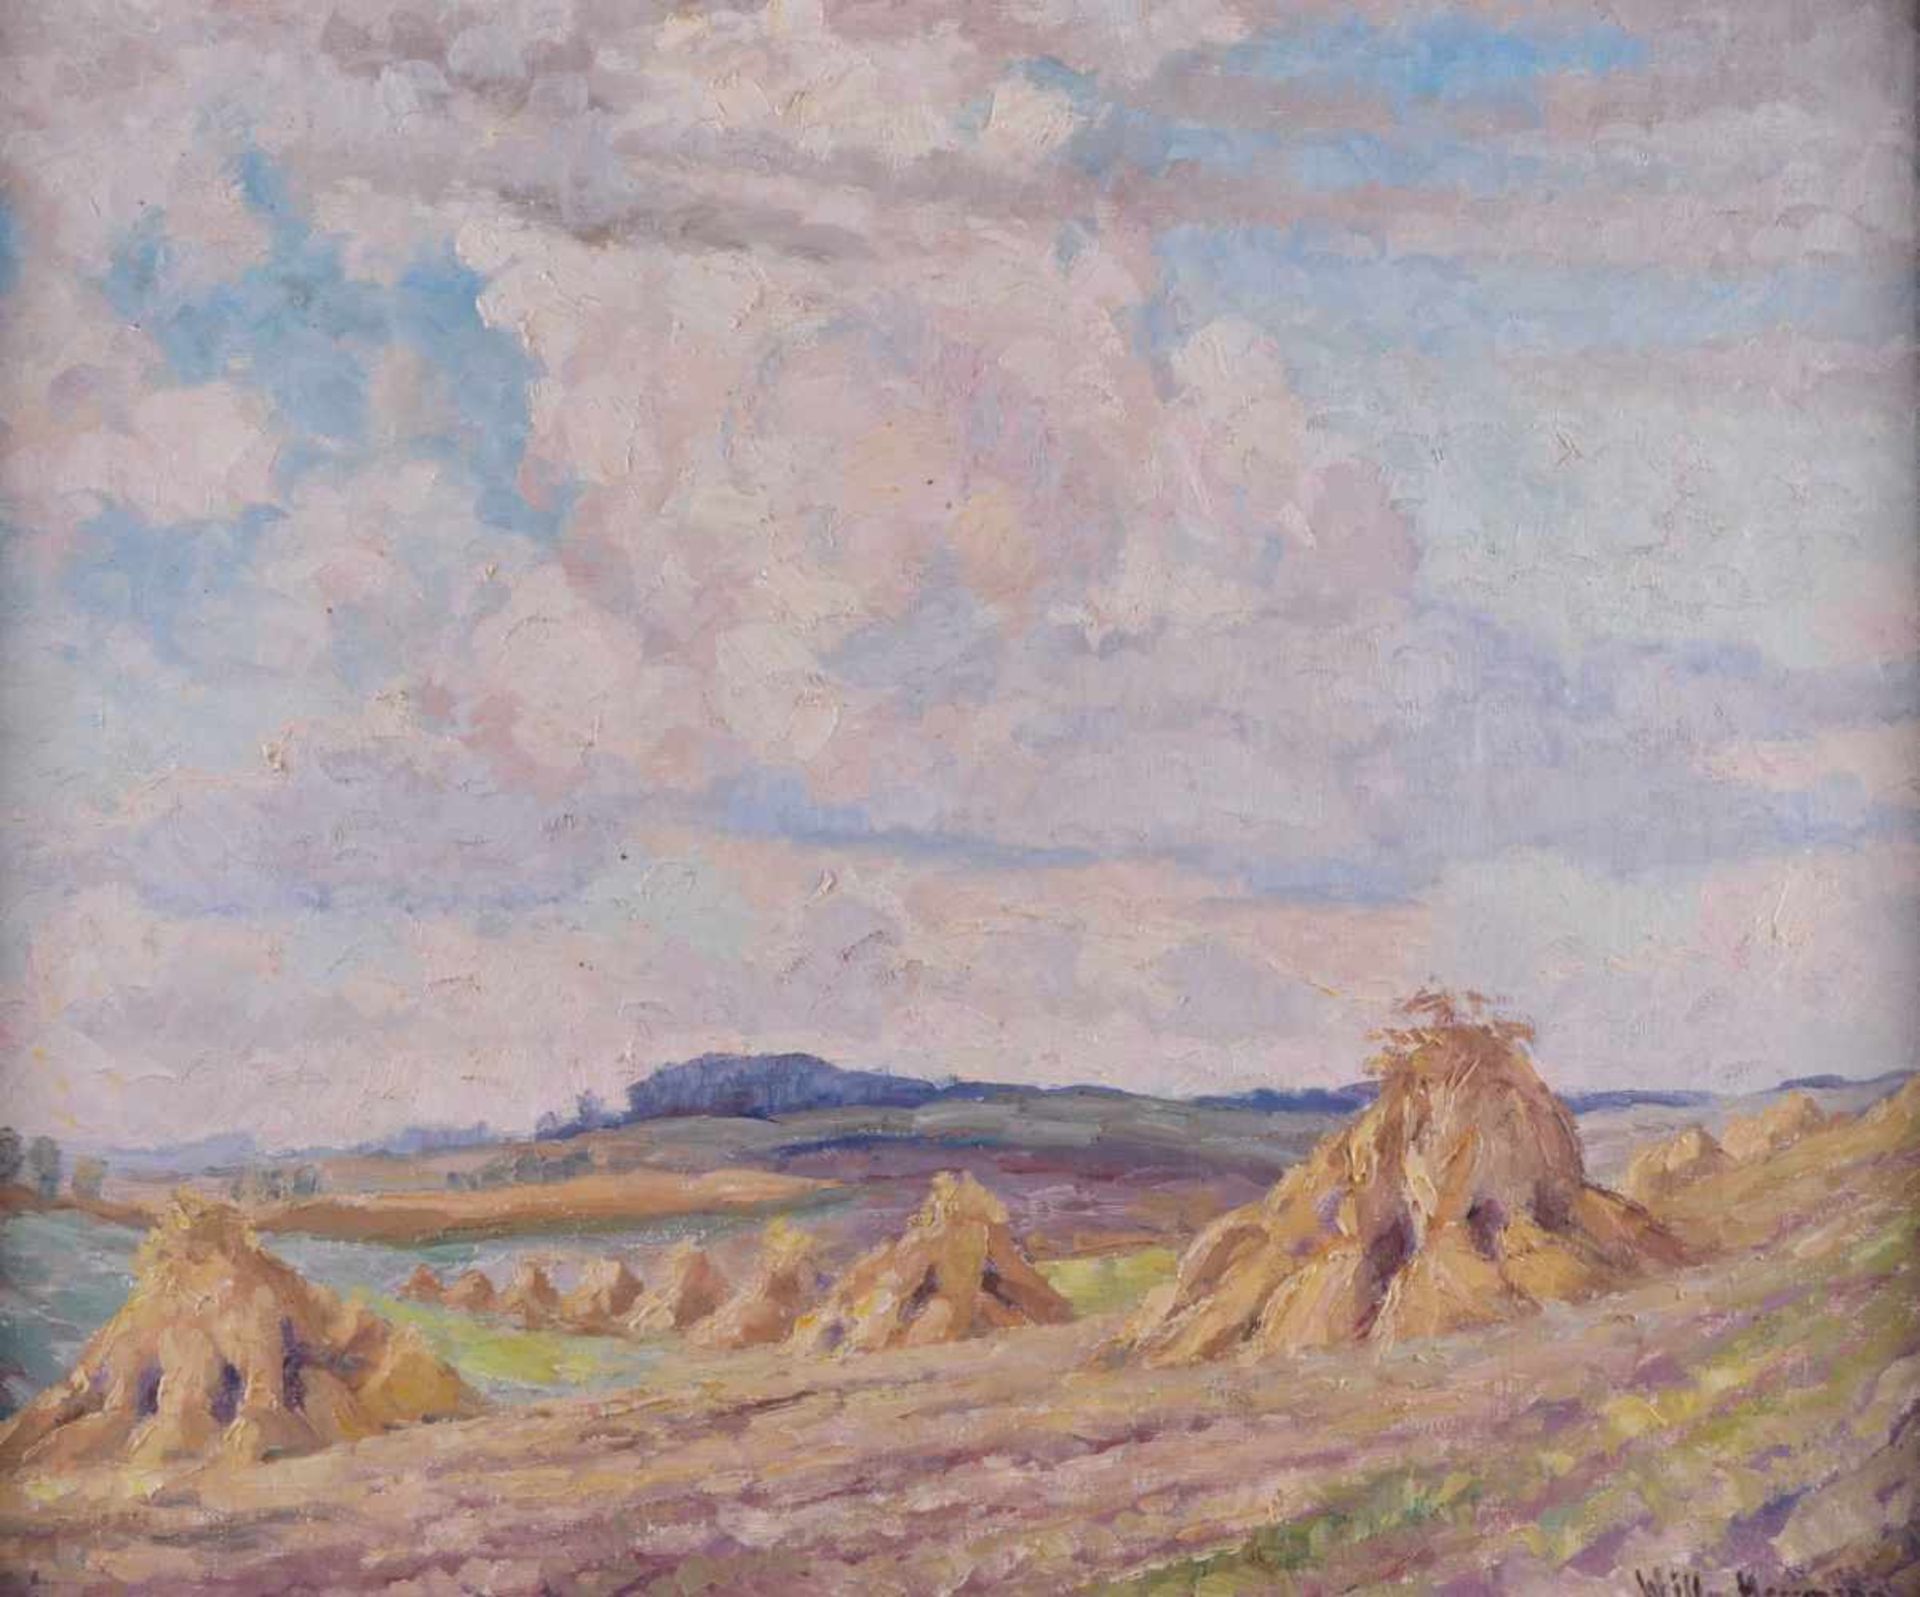 Willy HERRMANN (1895-1963)"Heuhaufen"Gemälde Öl/Leinwand, 50,5 cm x 60,5 cm,rechts unten